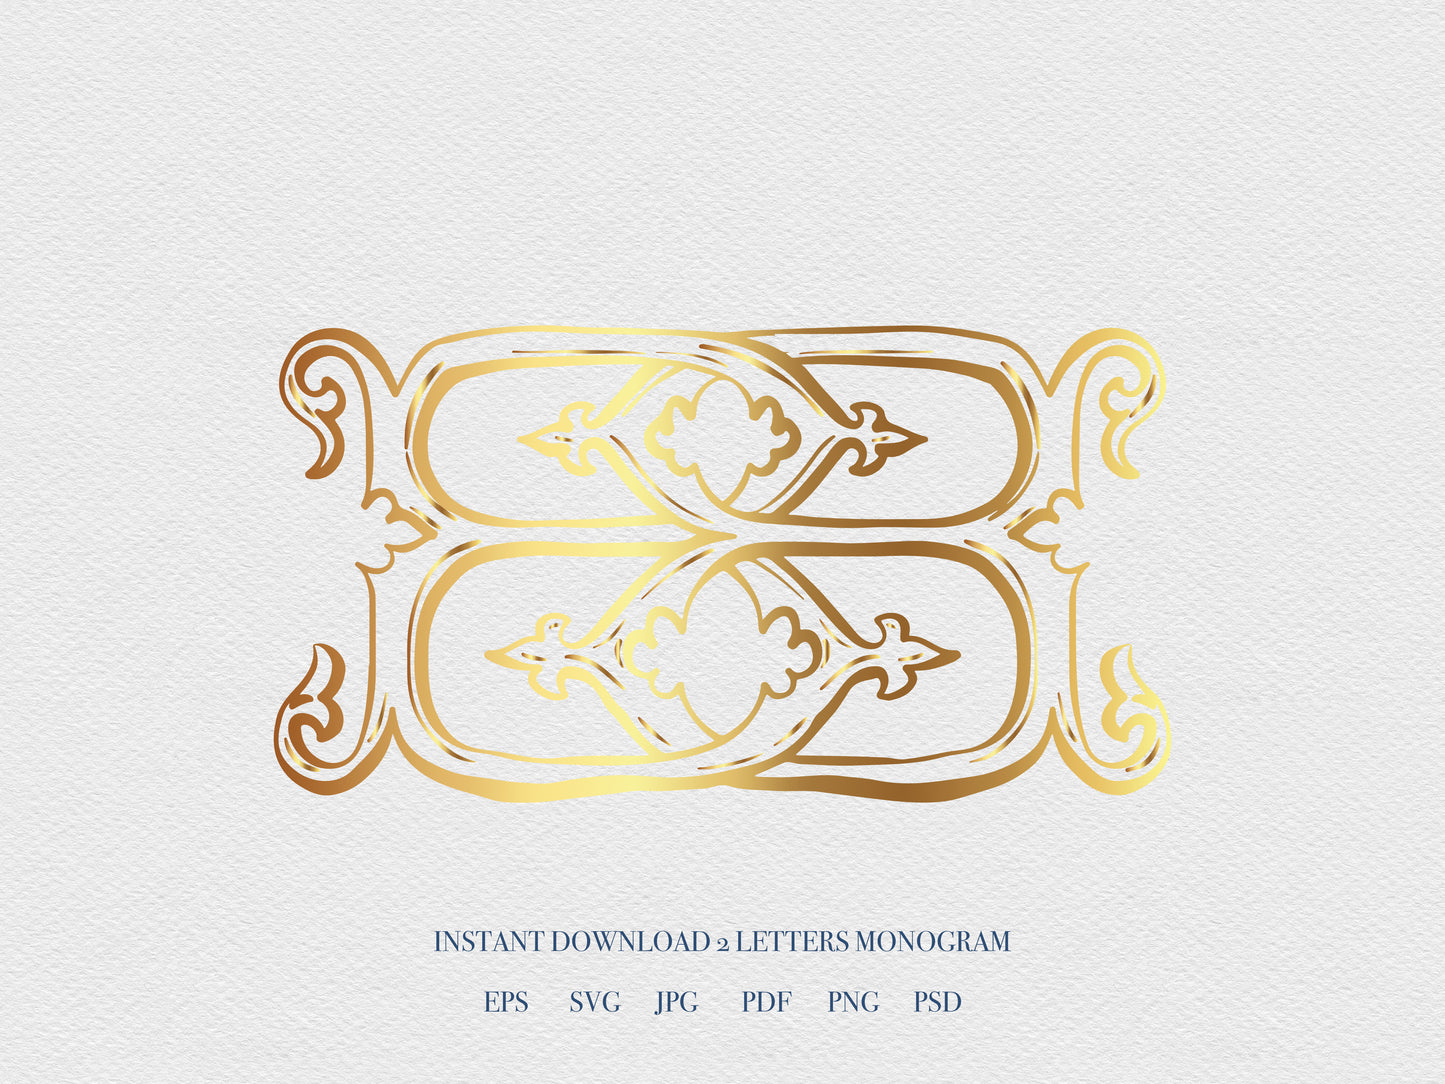 2 Letter Monogram with Letters BB | Digital Download - Wedding Monogram SVG, Personal Logo, Wedding Logo for Wedding Invitations